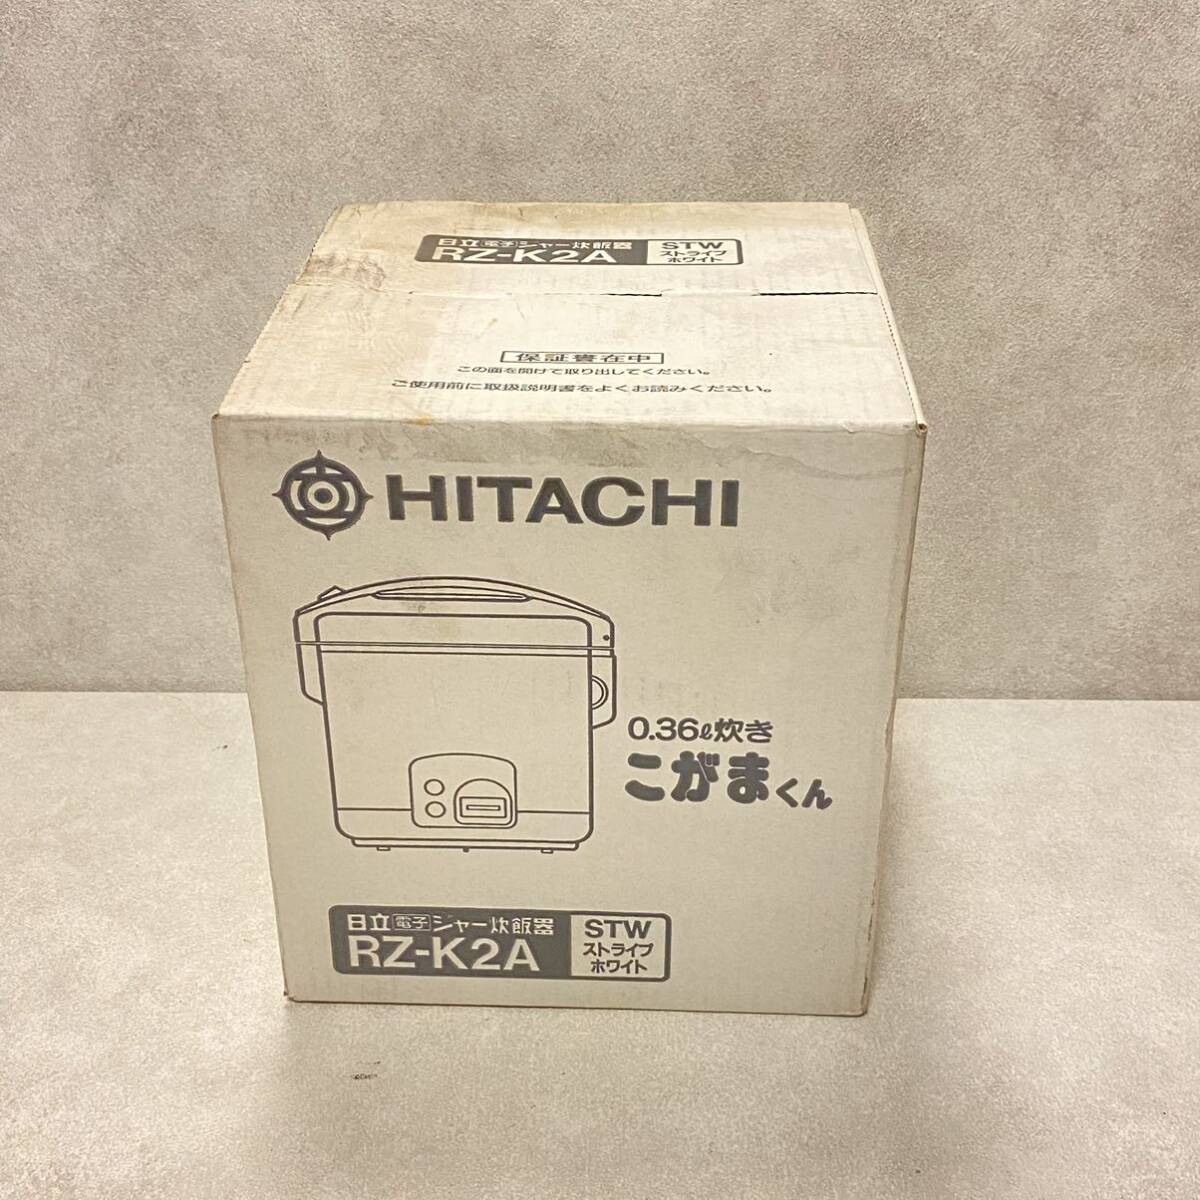 【EW240077】 日立 こがまくん RZ-K2A 炊飯器 電子ジャー 0.36L 2合炊き HITACHI_画像8